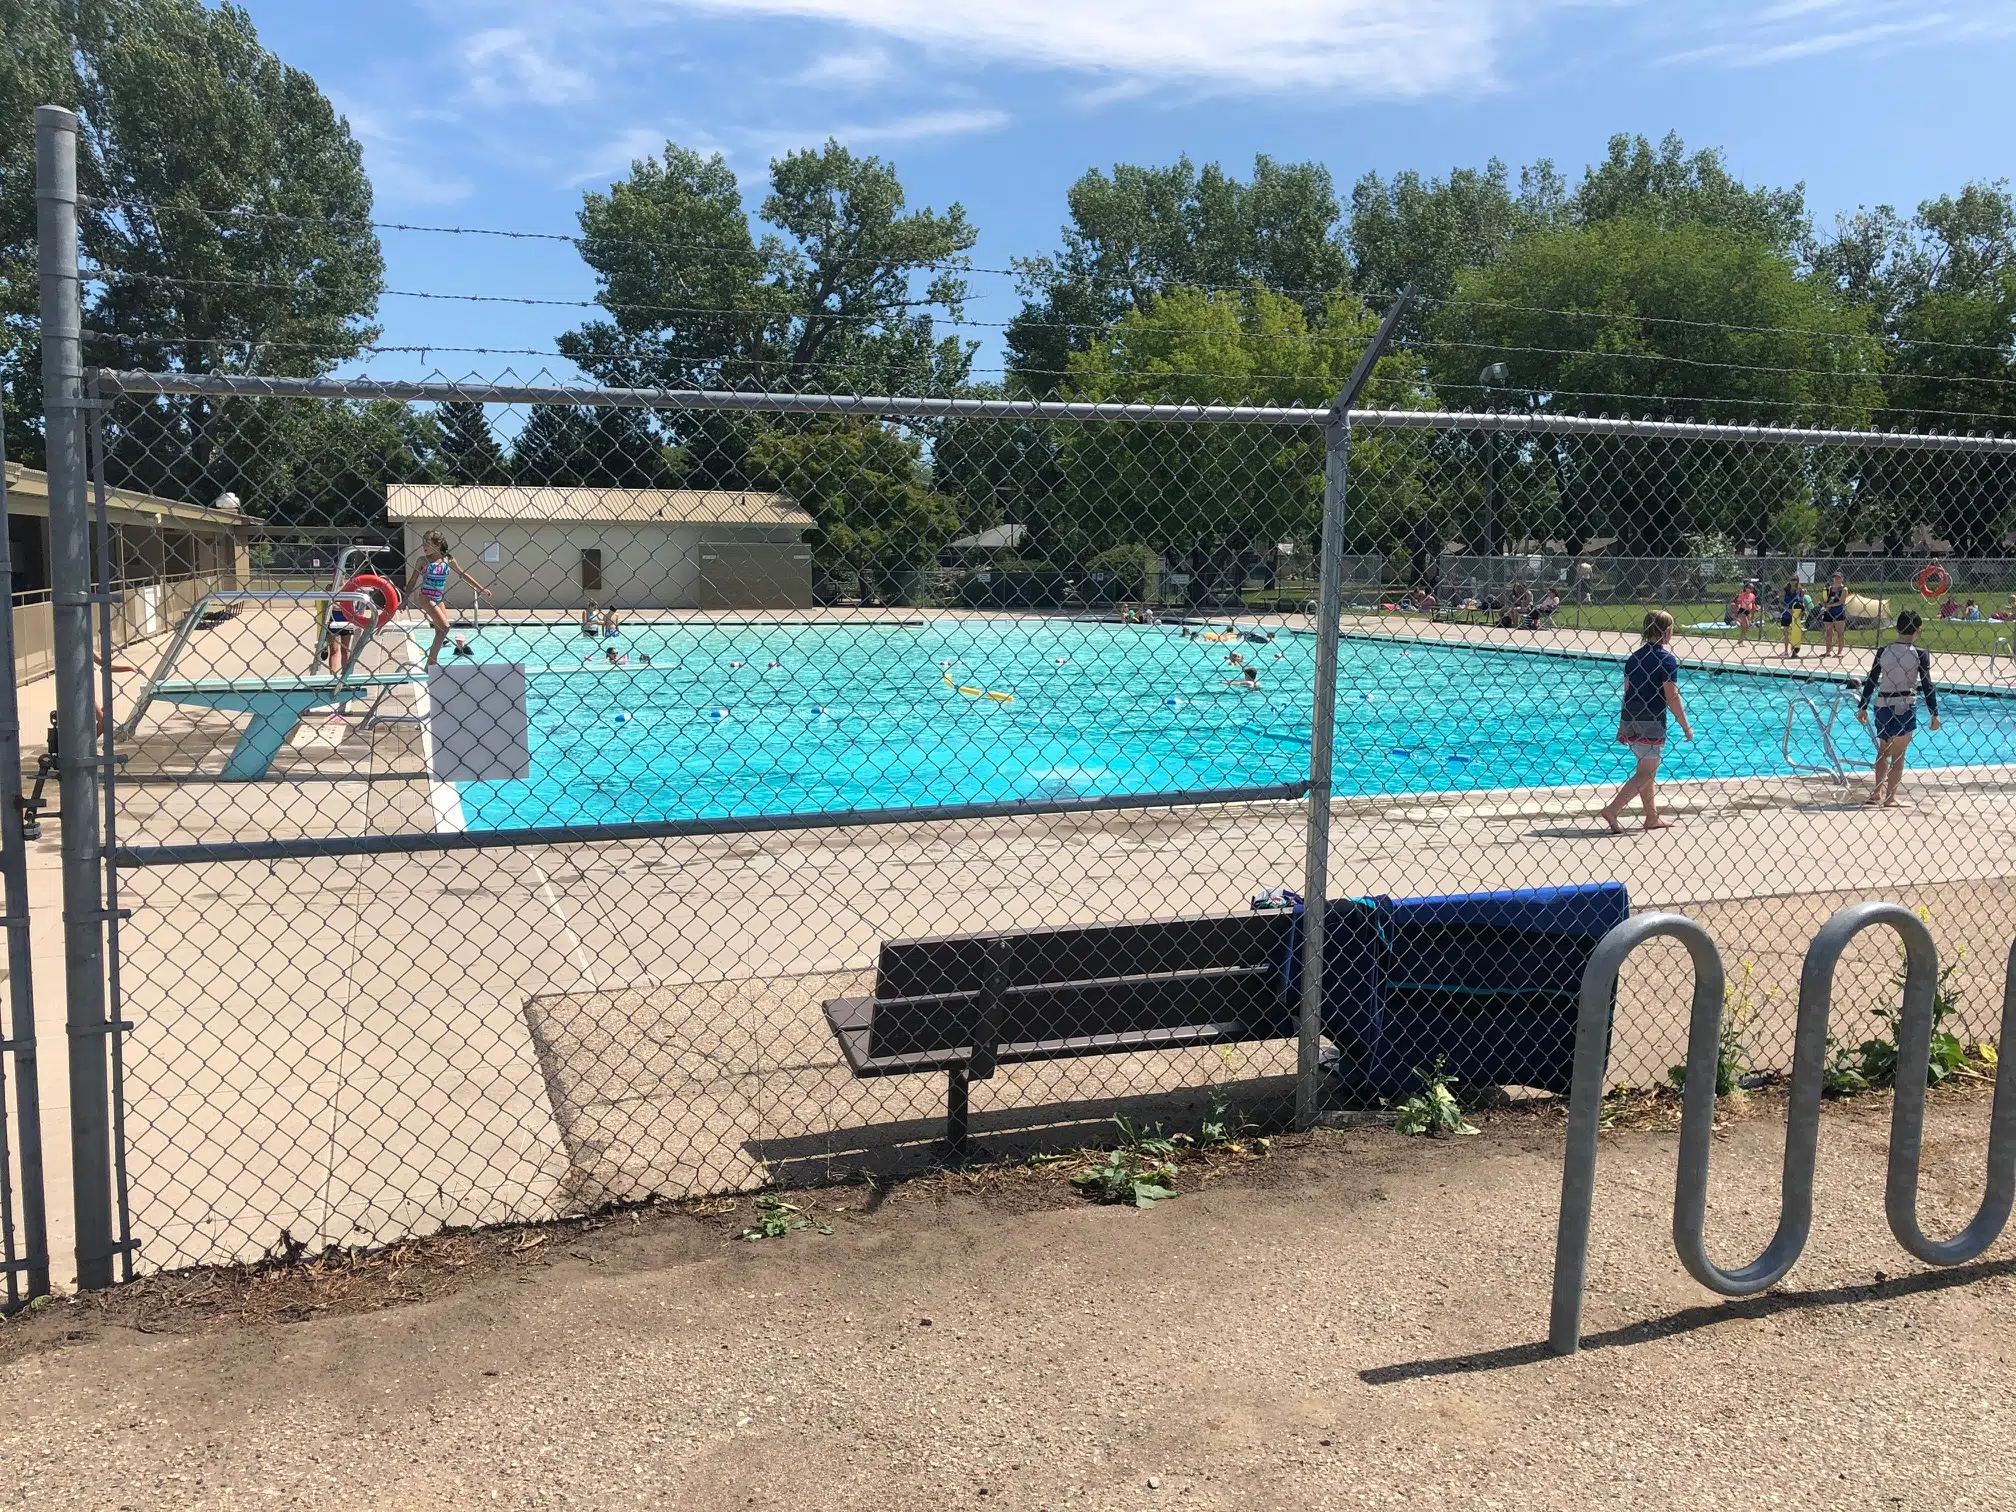 Families flock to Saskatoon’s outdoor pools to beat the heat